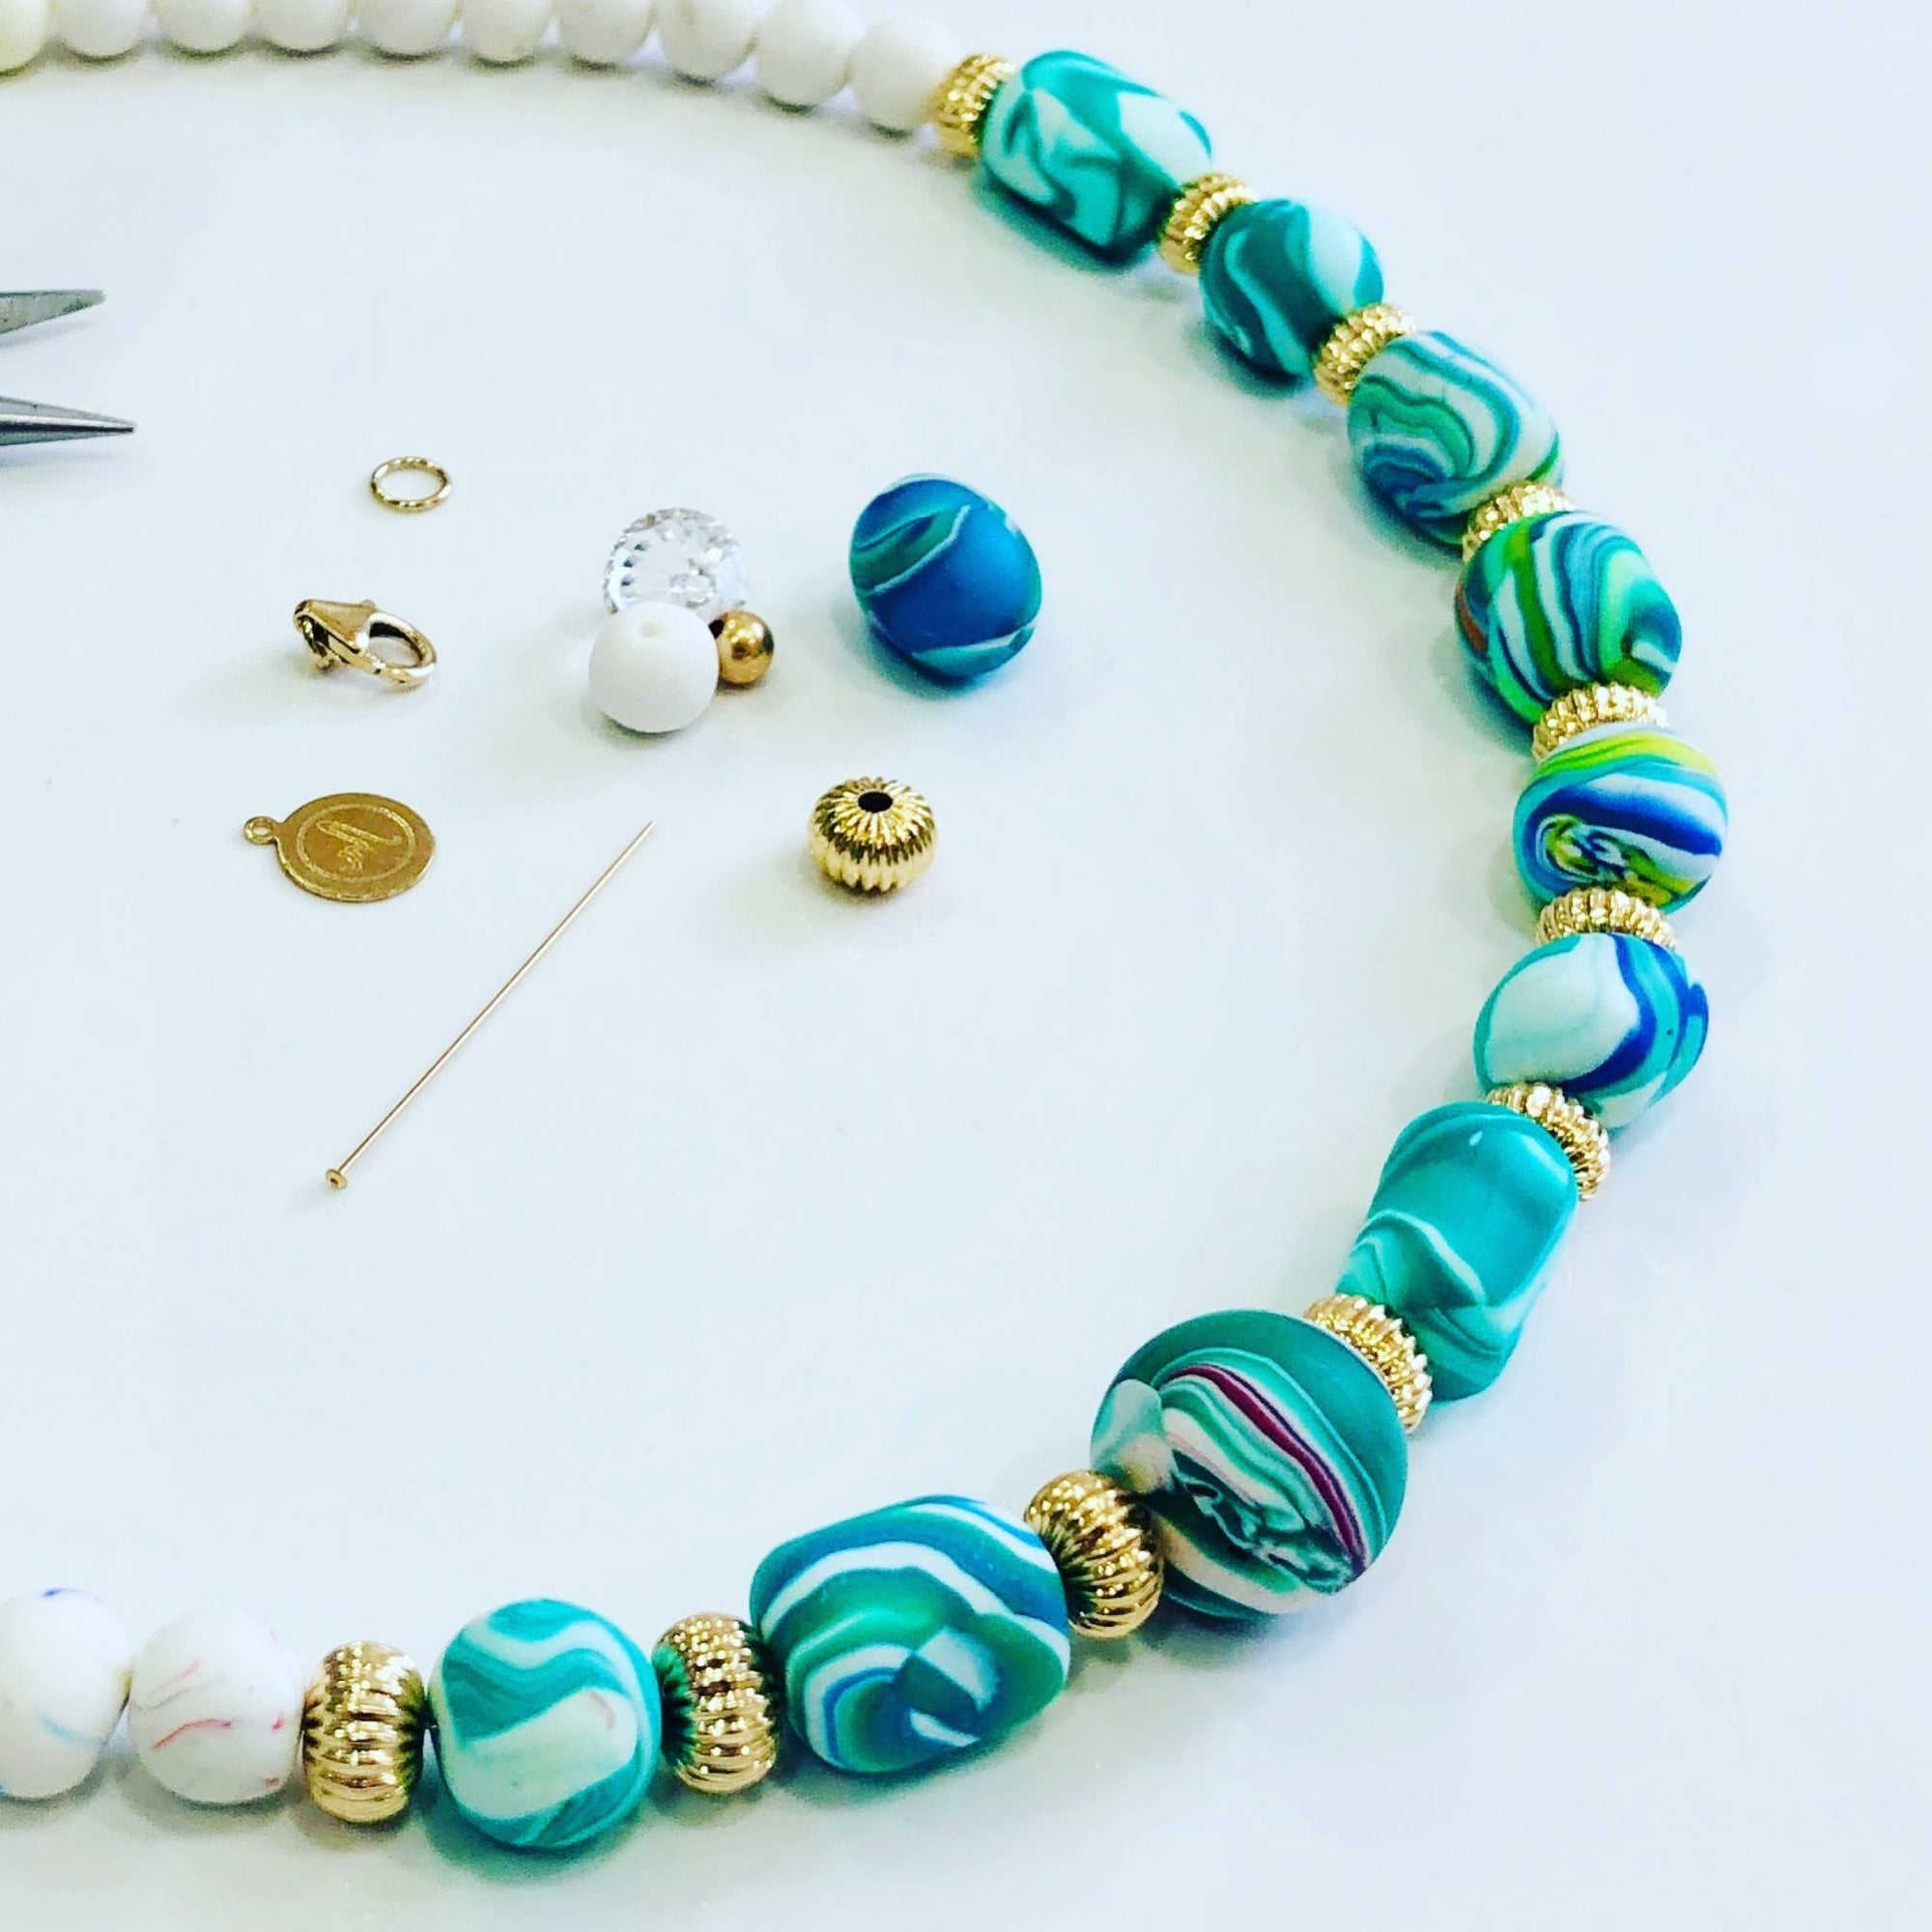 Necklaces with Original Marina Ra Beads and Gemstone Necklaces with Marina-Ra original beads